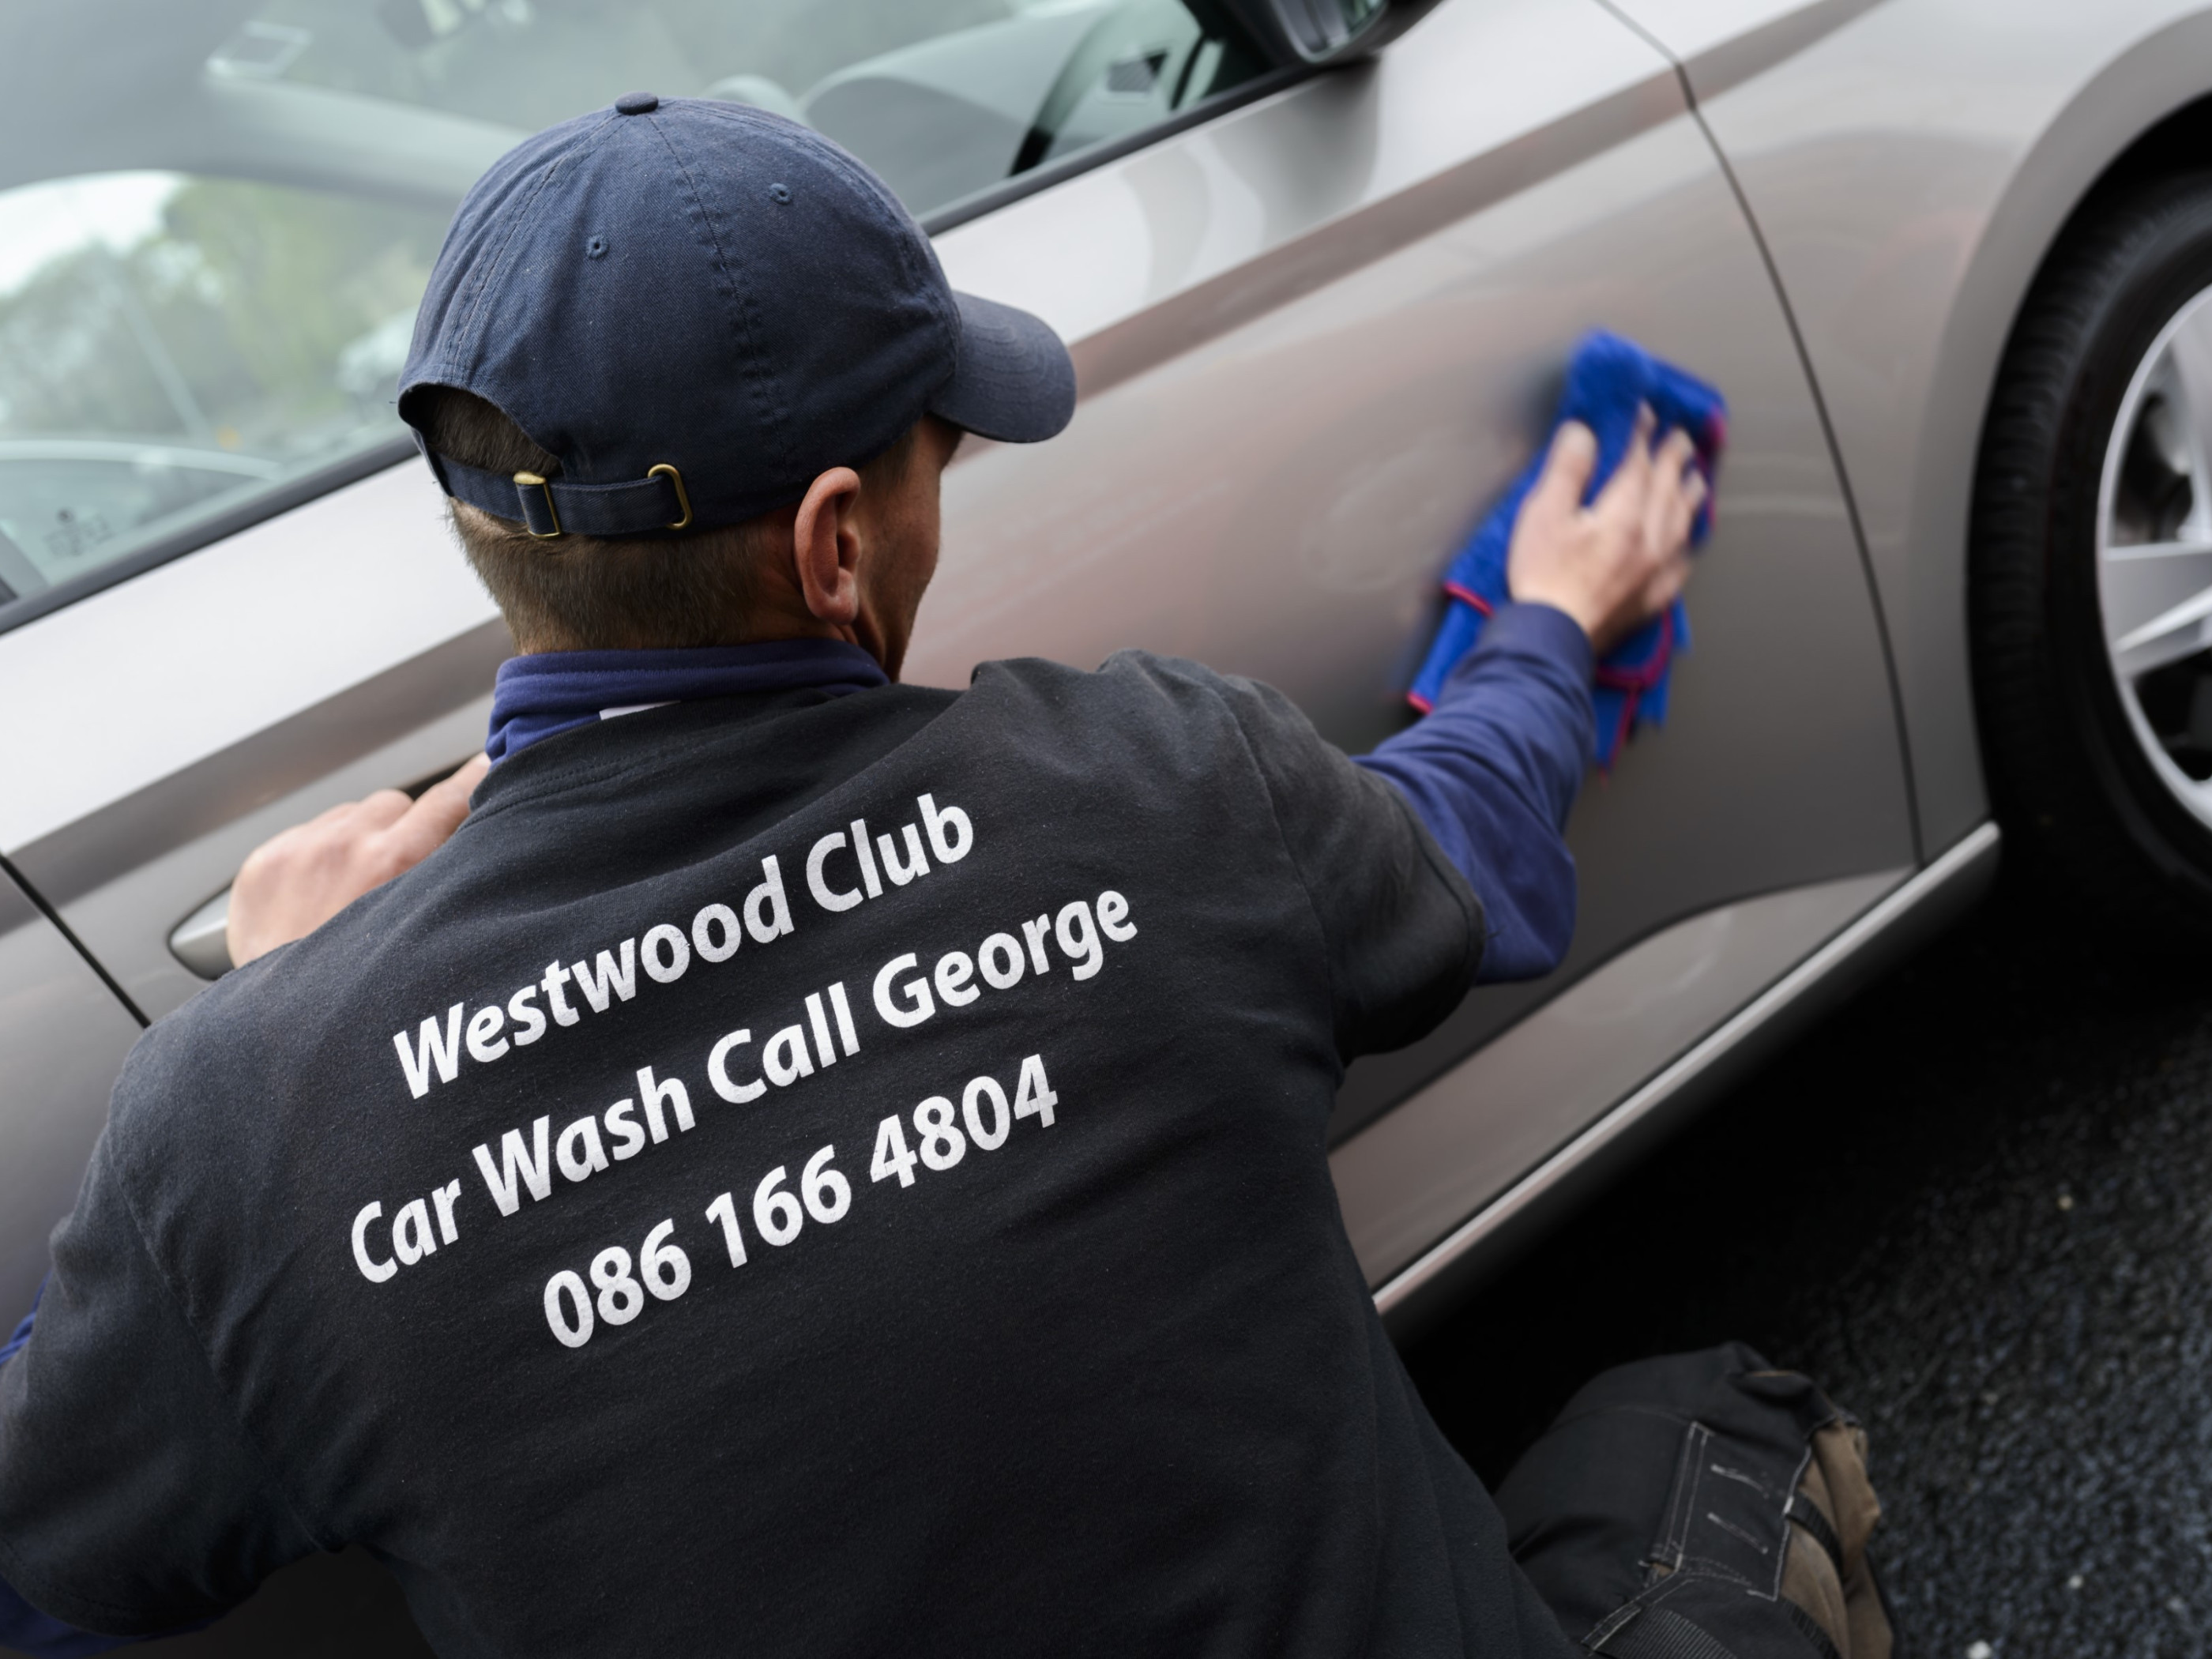 Car Wash Dublin at West Wood Club Leopardstown